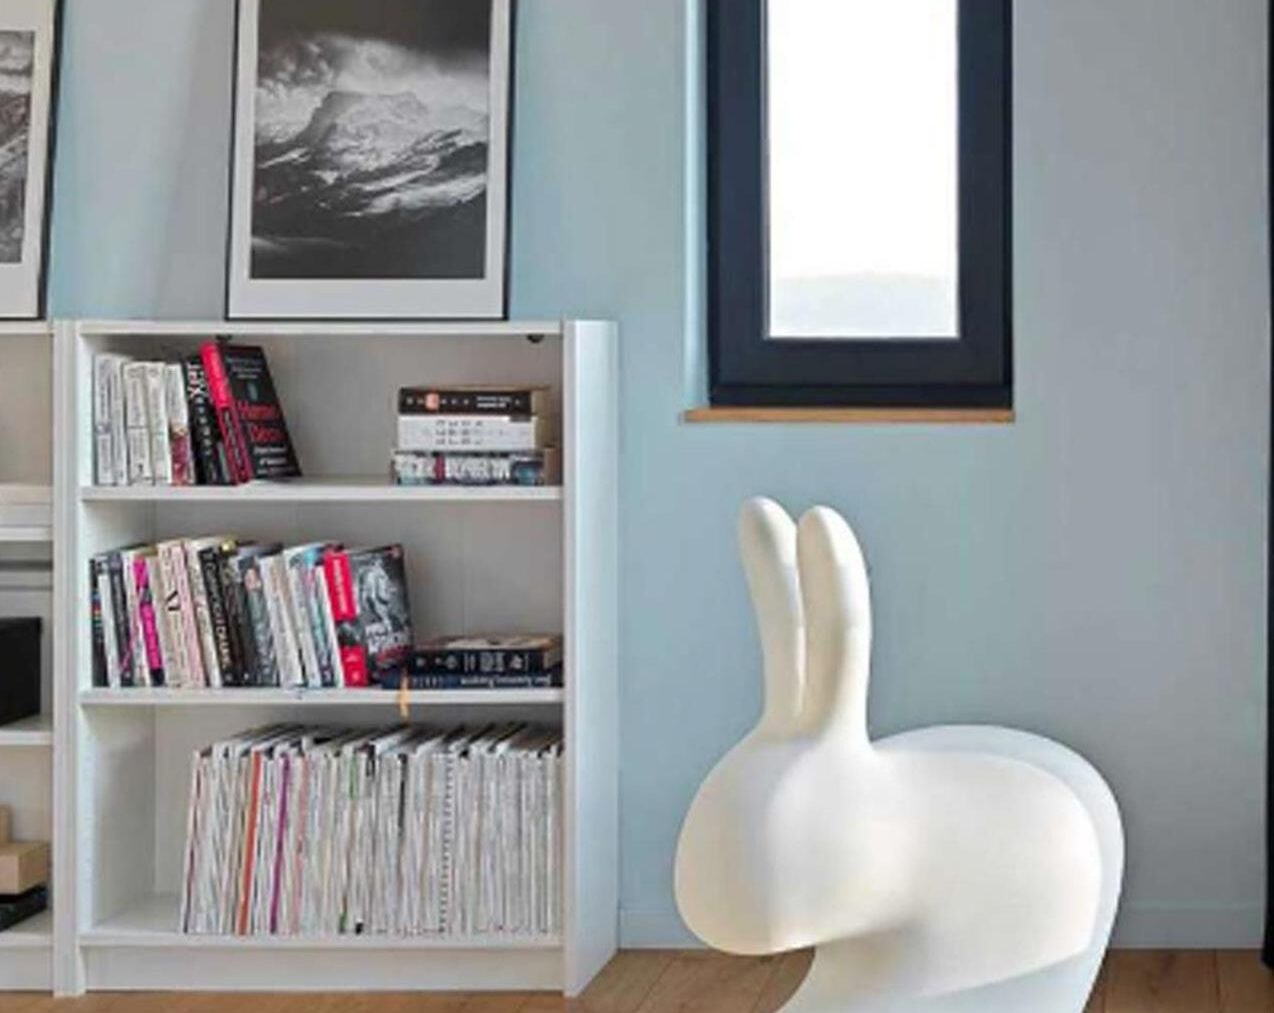 Rabbit-Chair-Dove-Grey